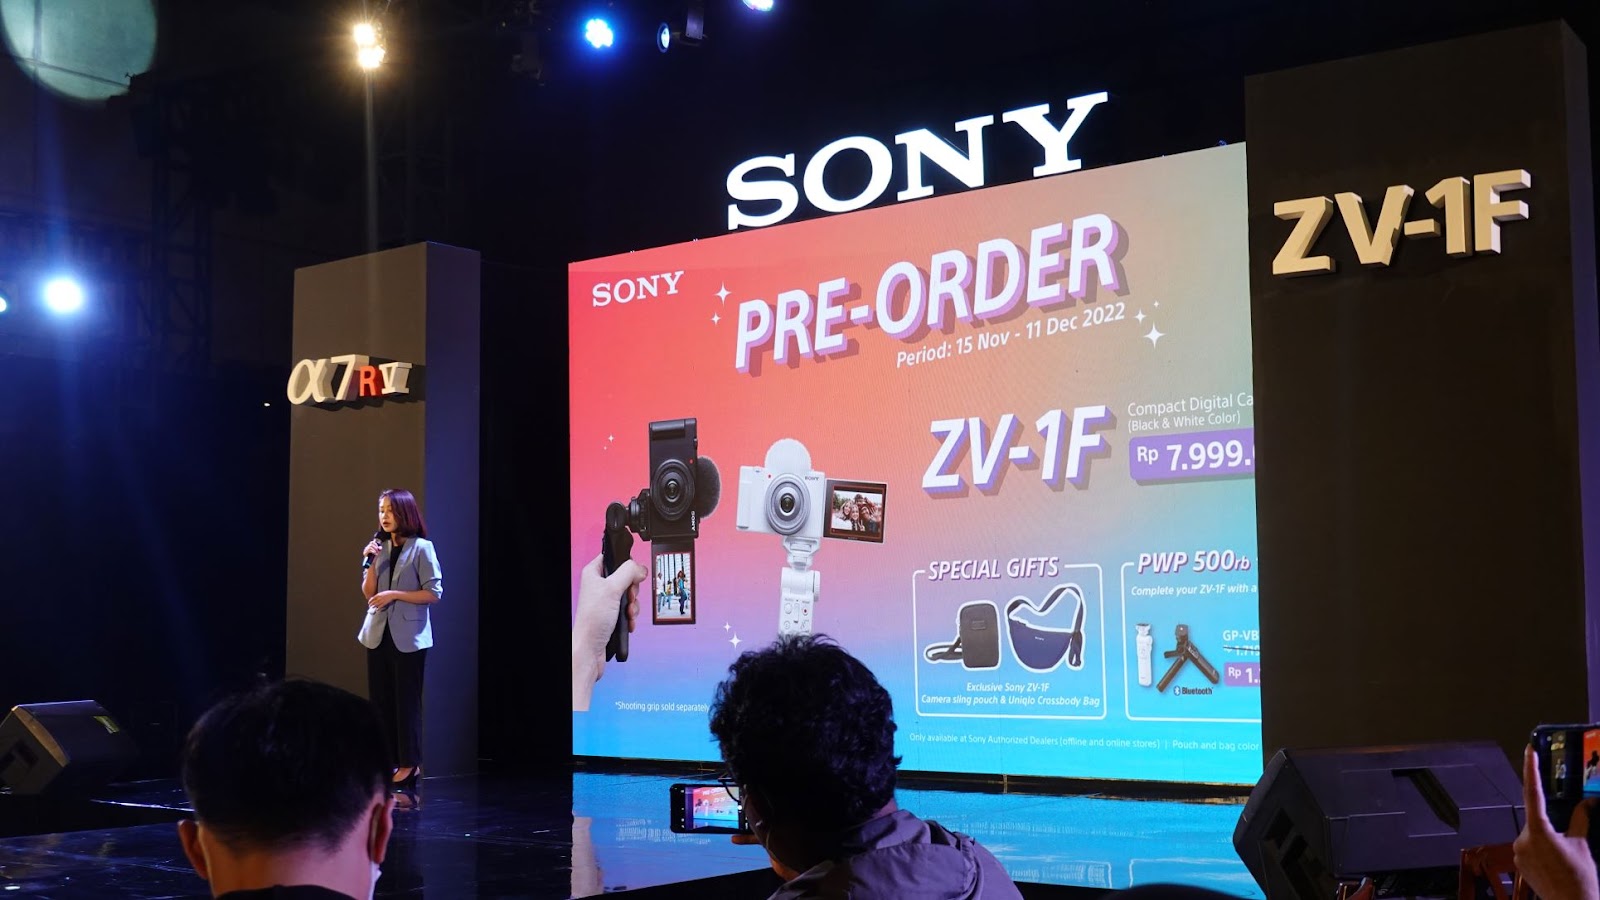 Harga Sony ZV-1F beserta bundle yang bisa lo dapatkan. (Sumber: Garry/Froyonion)